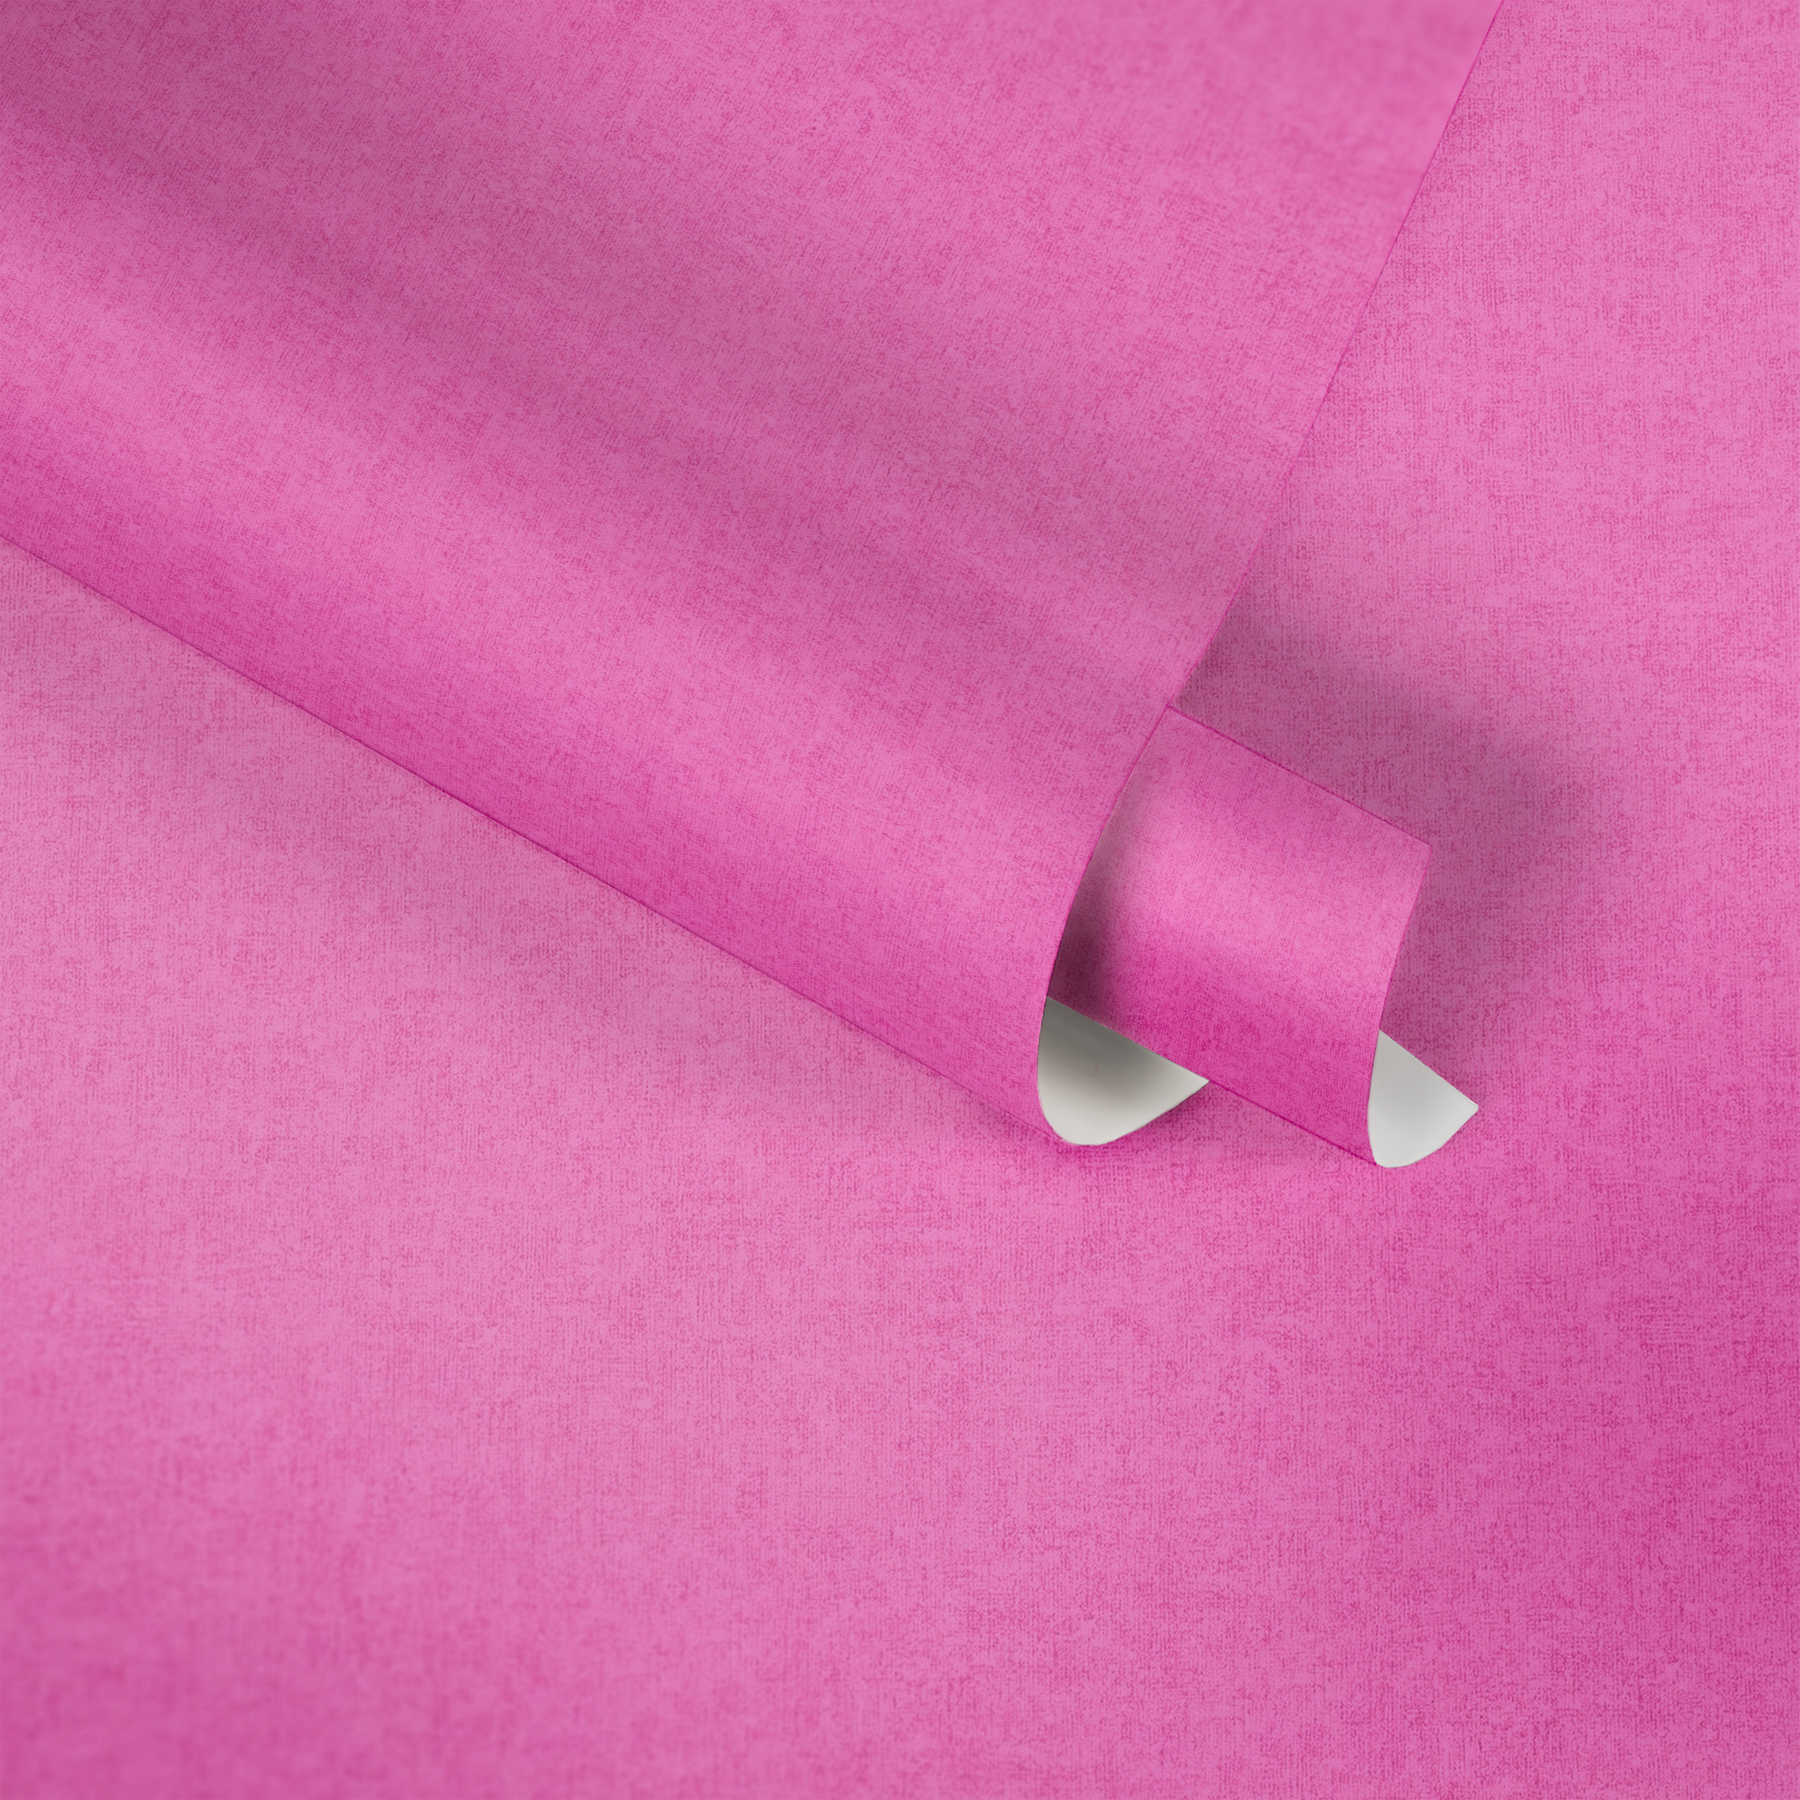             Nursery wallpaper pink for girls, monochrome
        